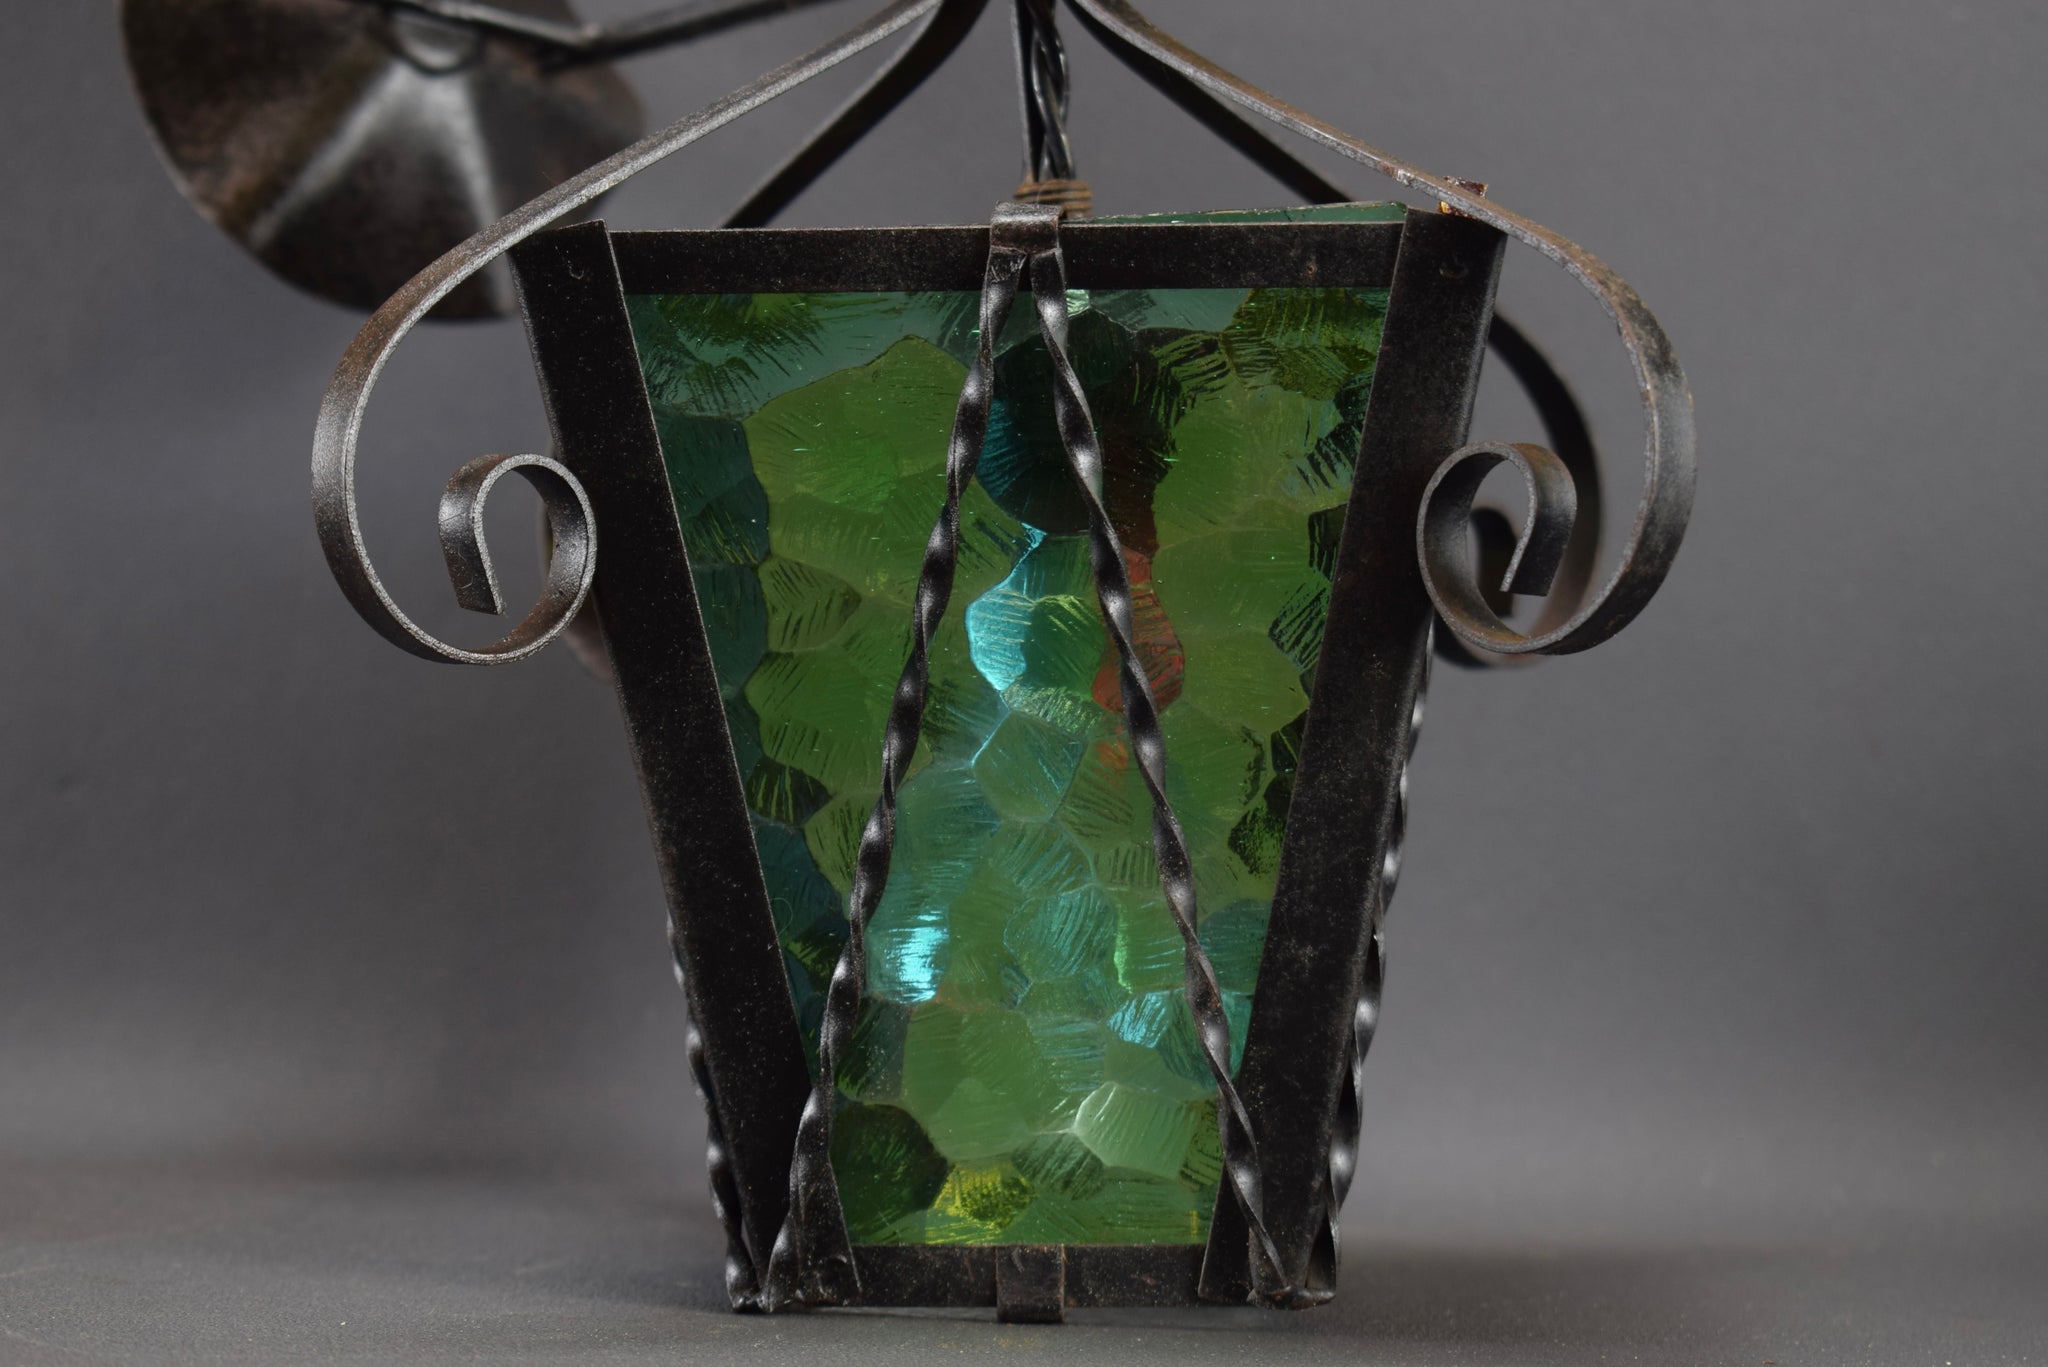 Colored Glass Lantern